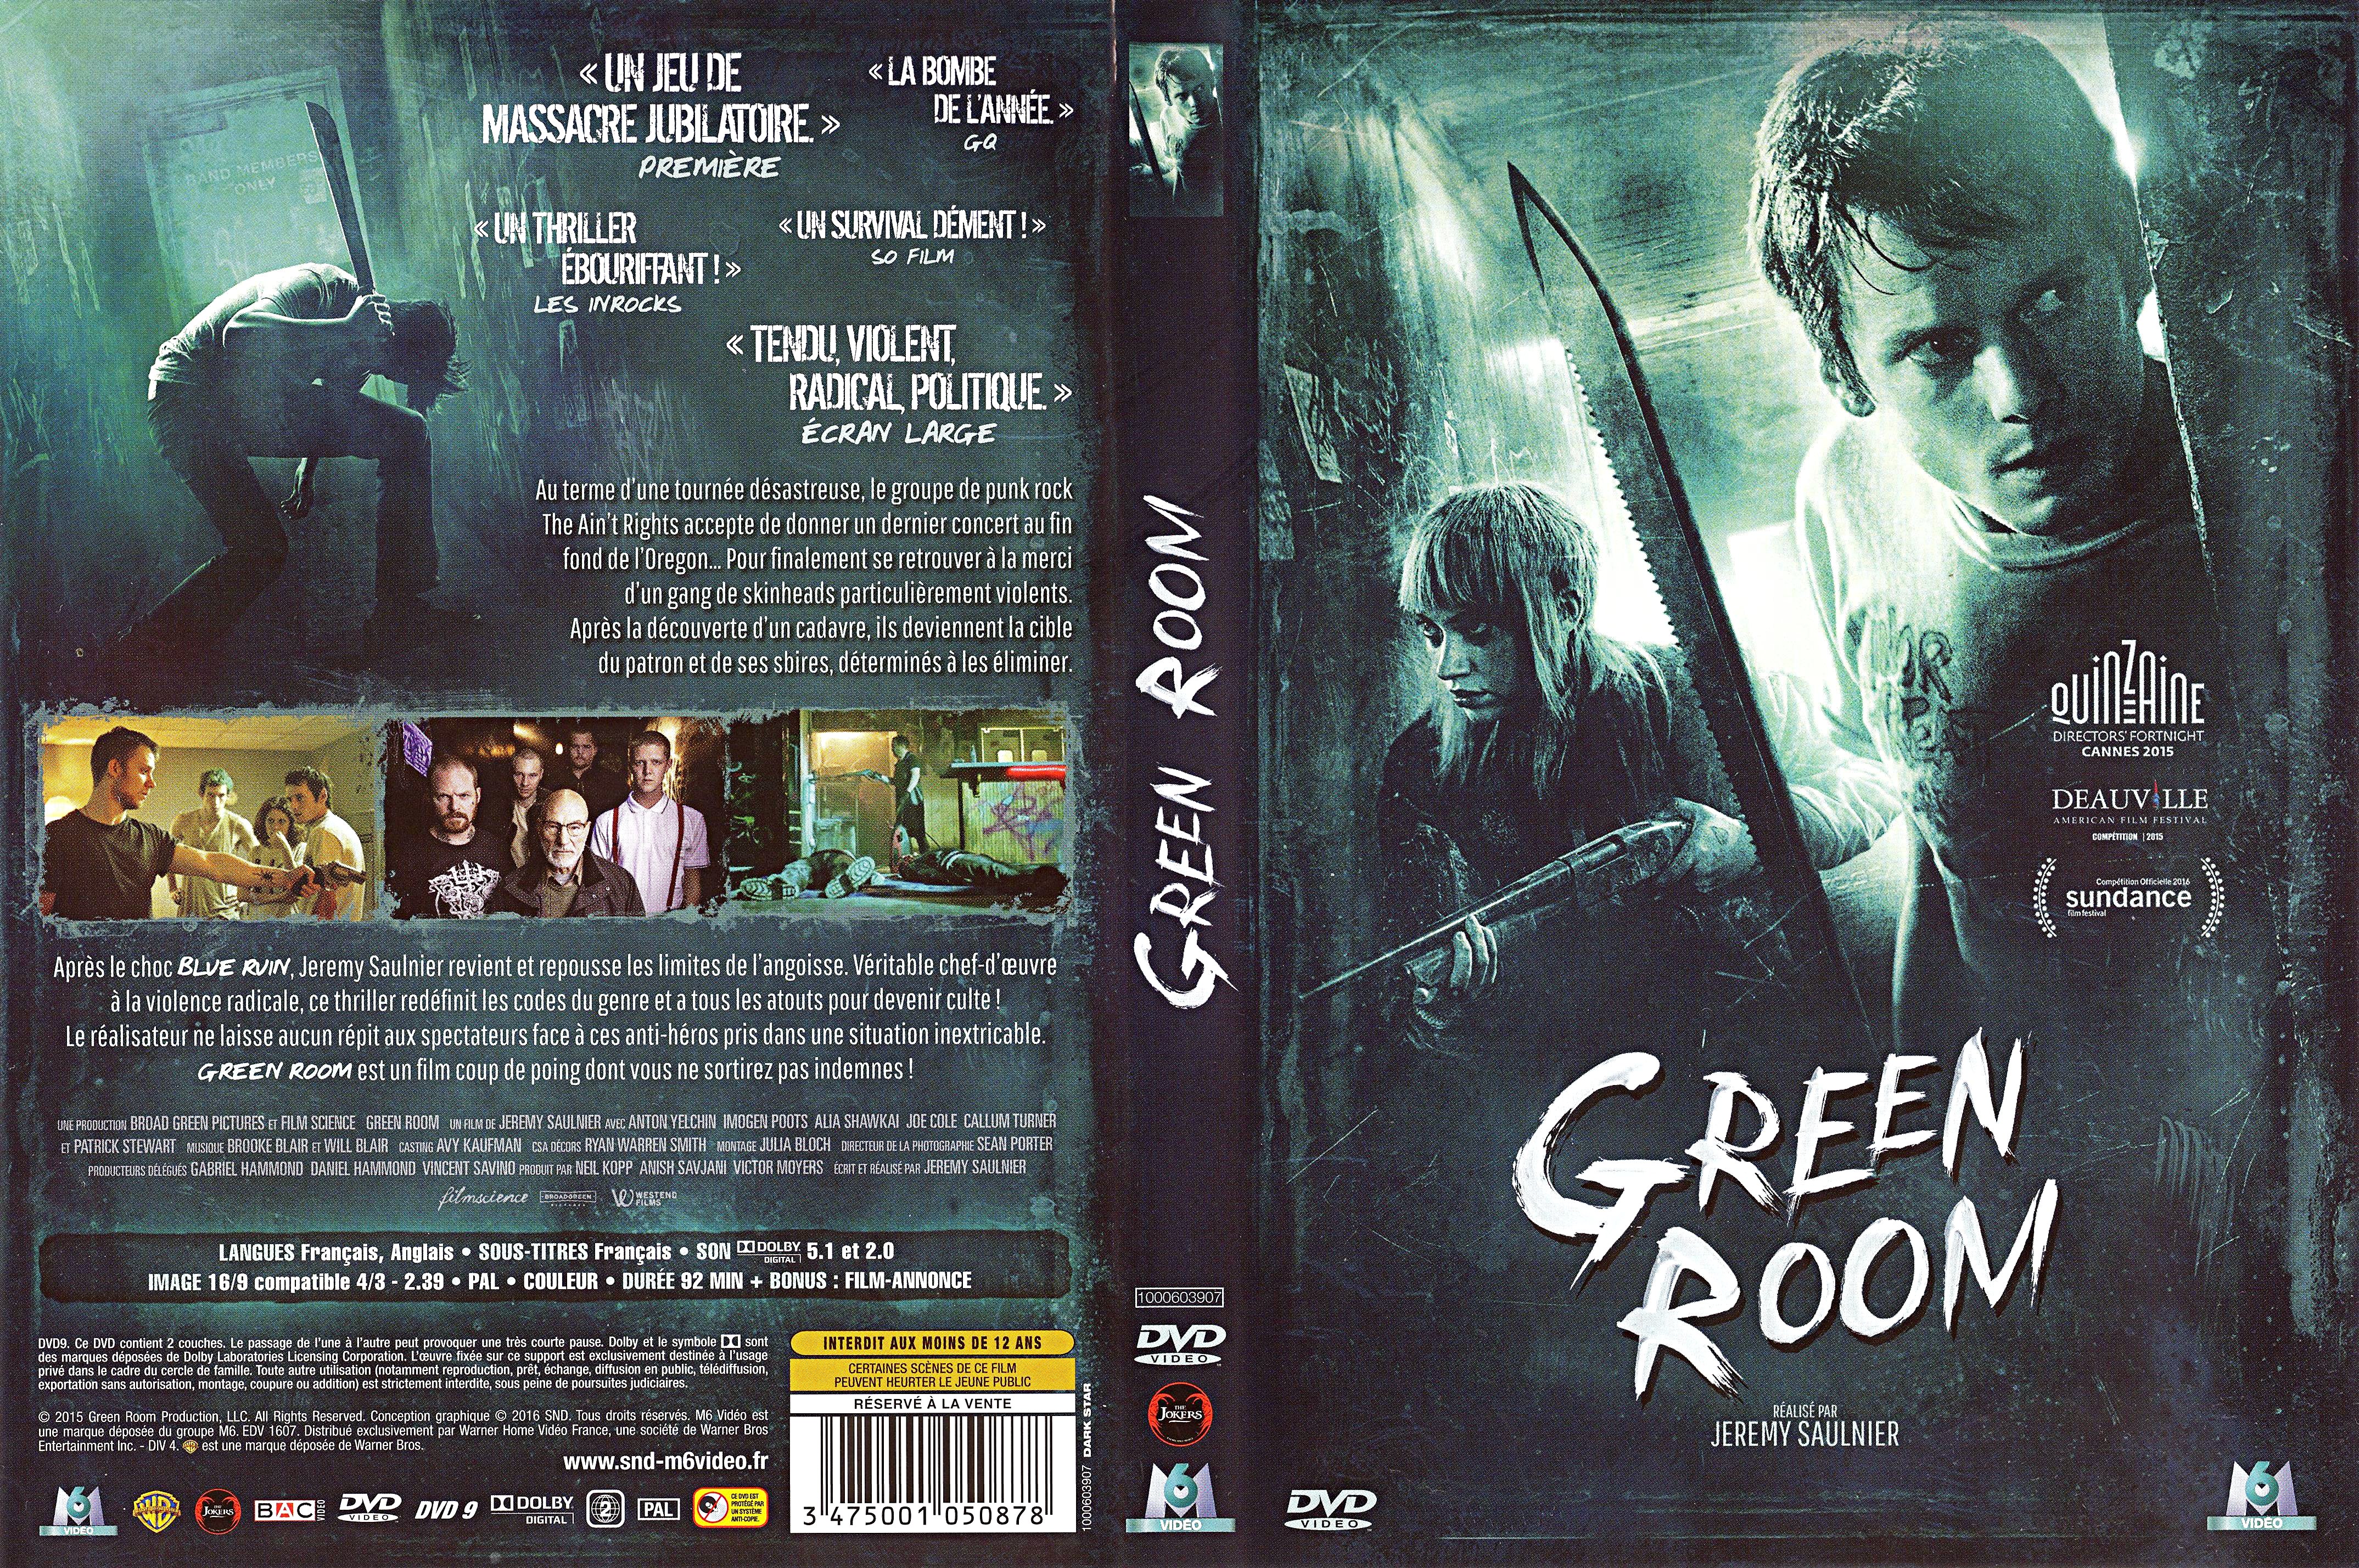 Jaquette DVD Green room